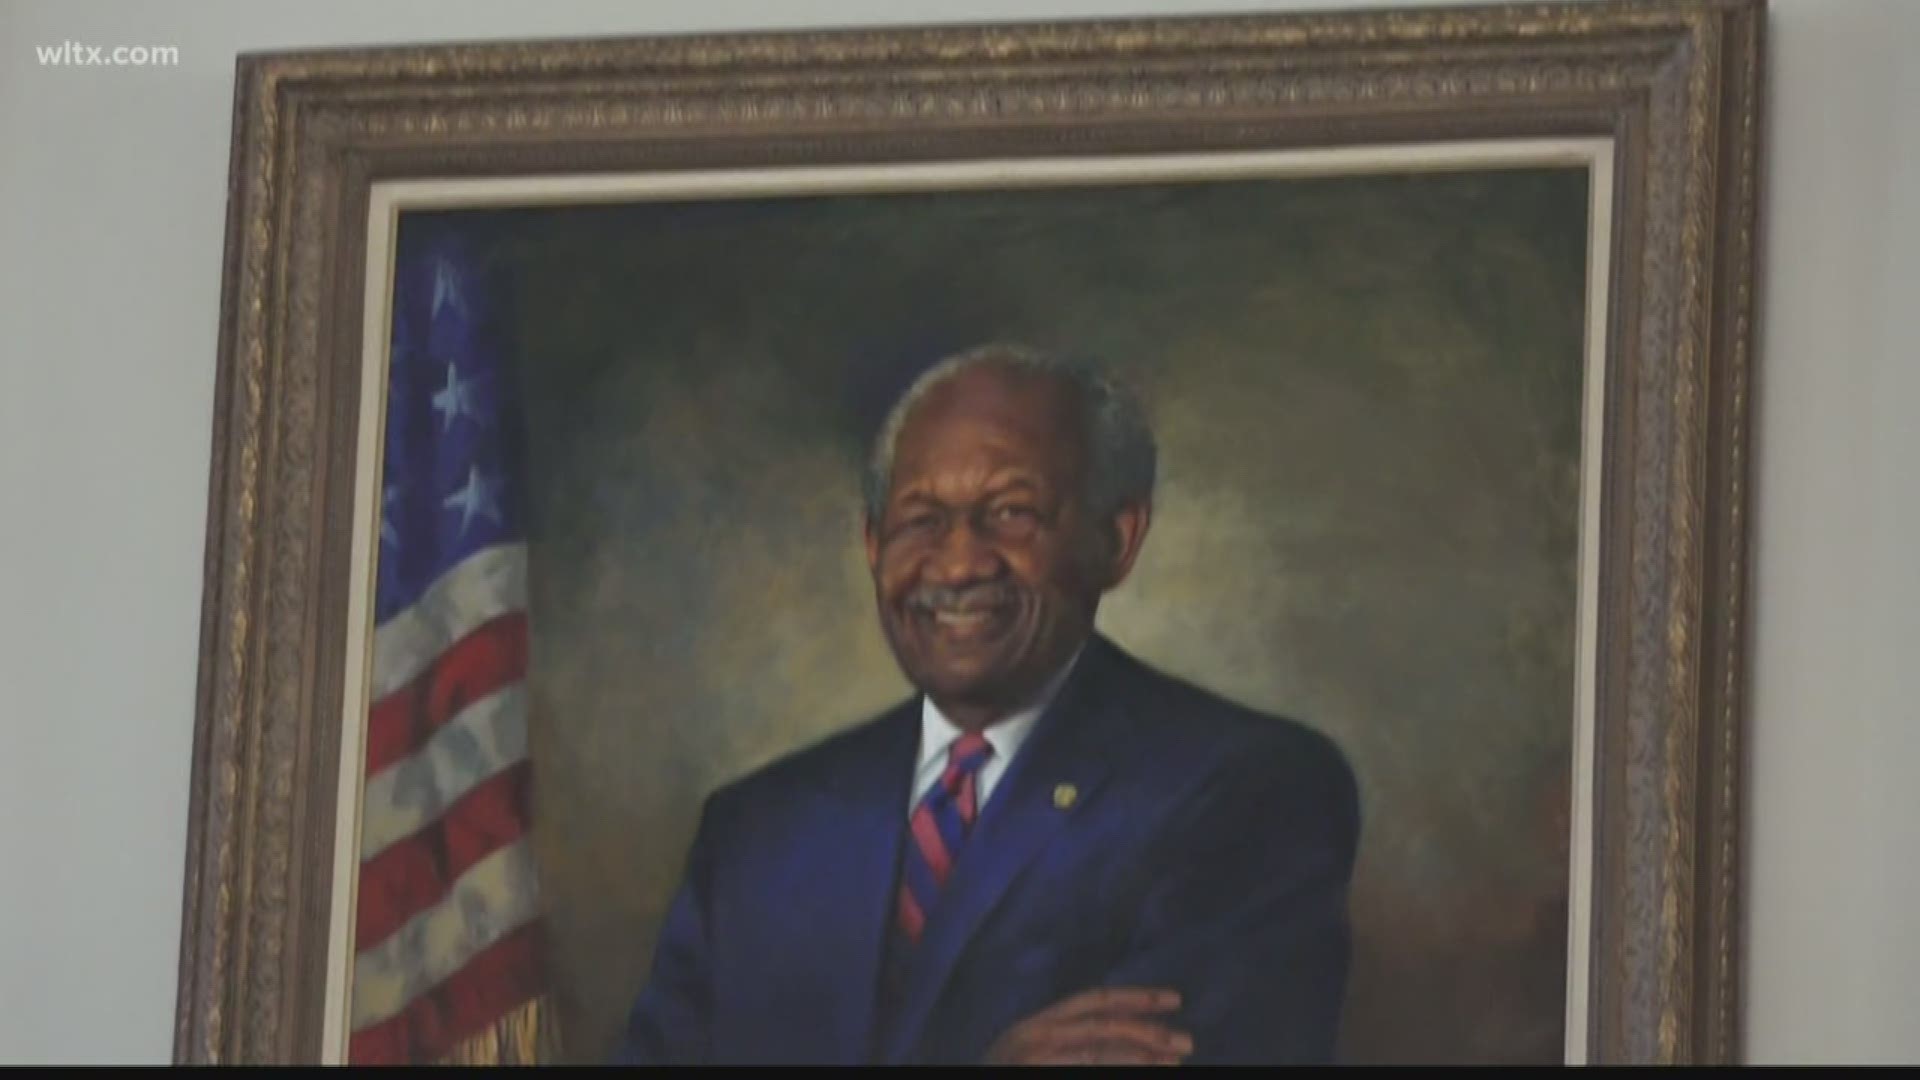 In the Senate gallery, there's a new portrait of Orangeburg Senator John Matthews.